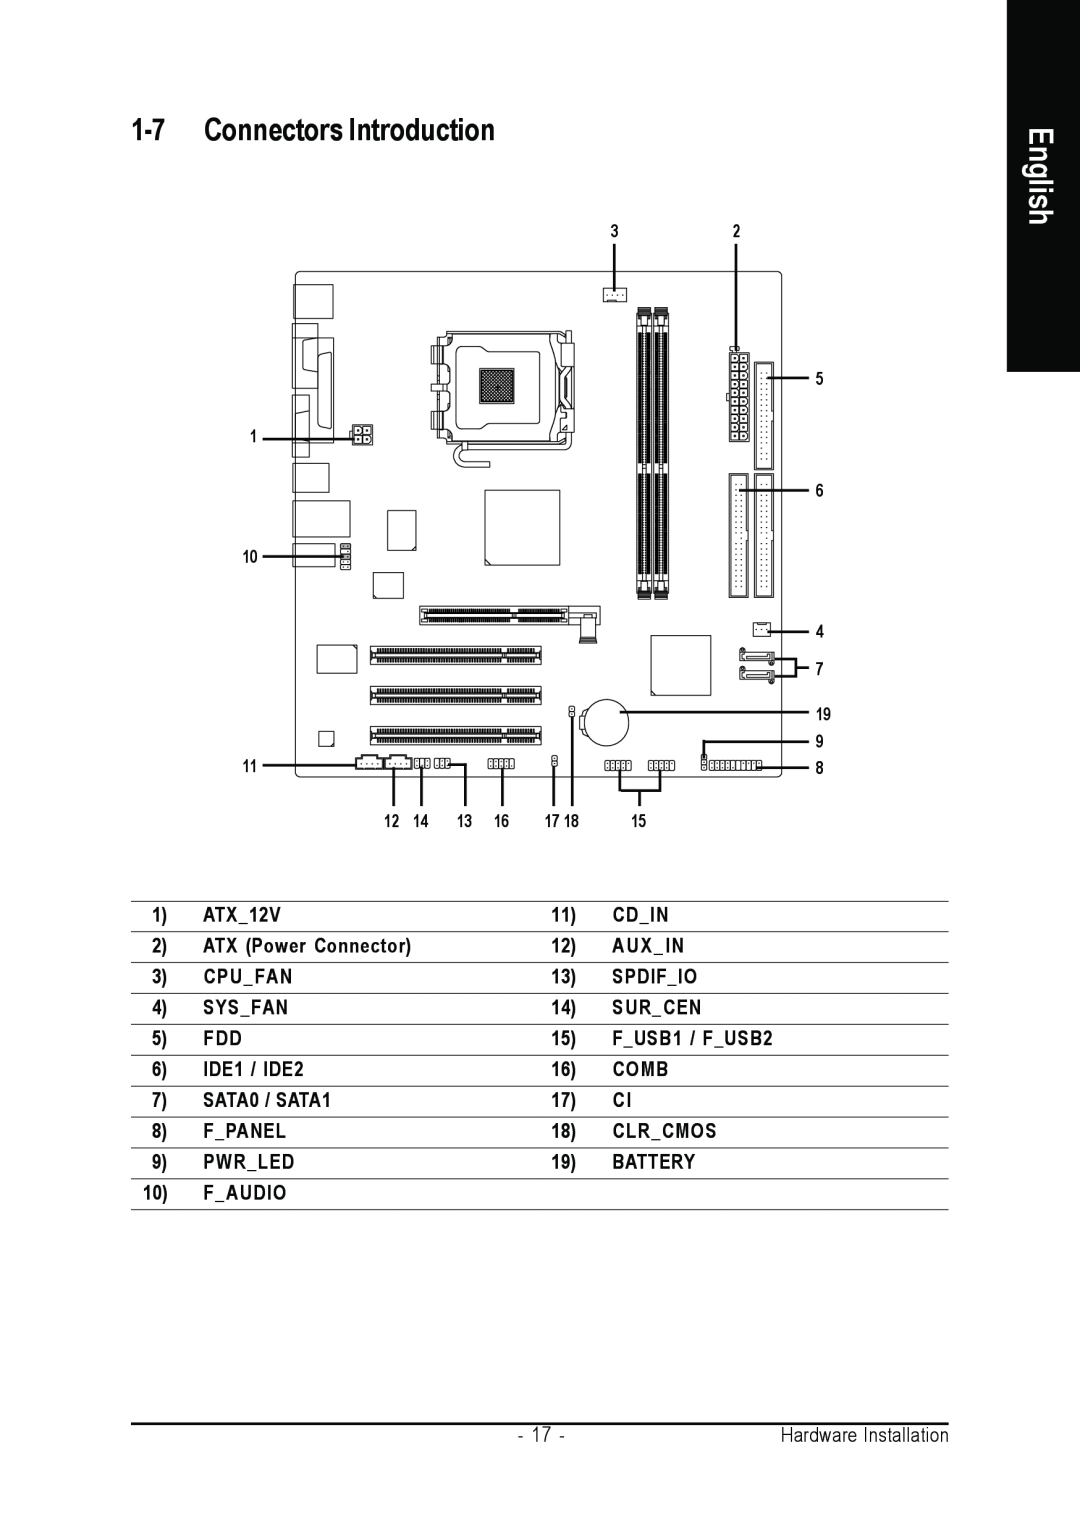 Intel GA-8VM800PMD-775 user manual Connectors Introduction, English 